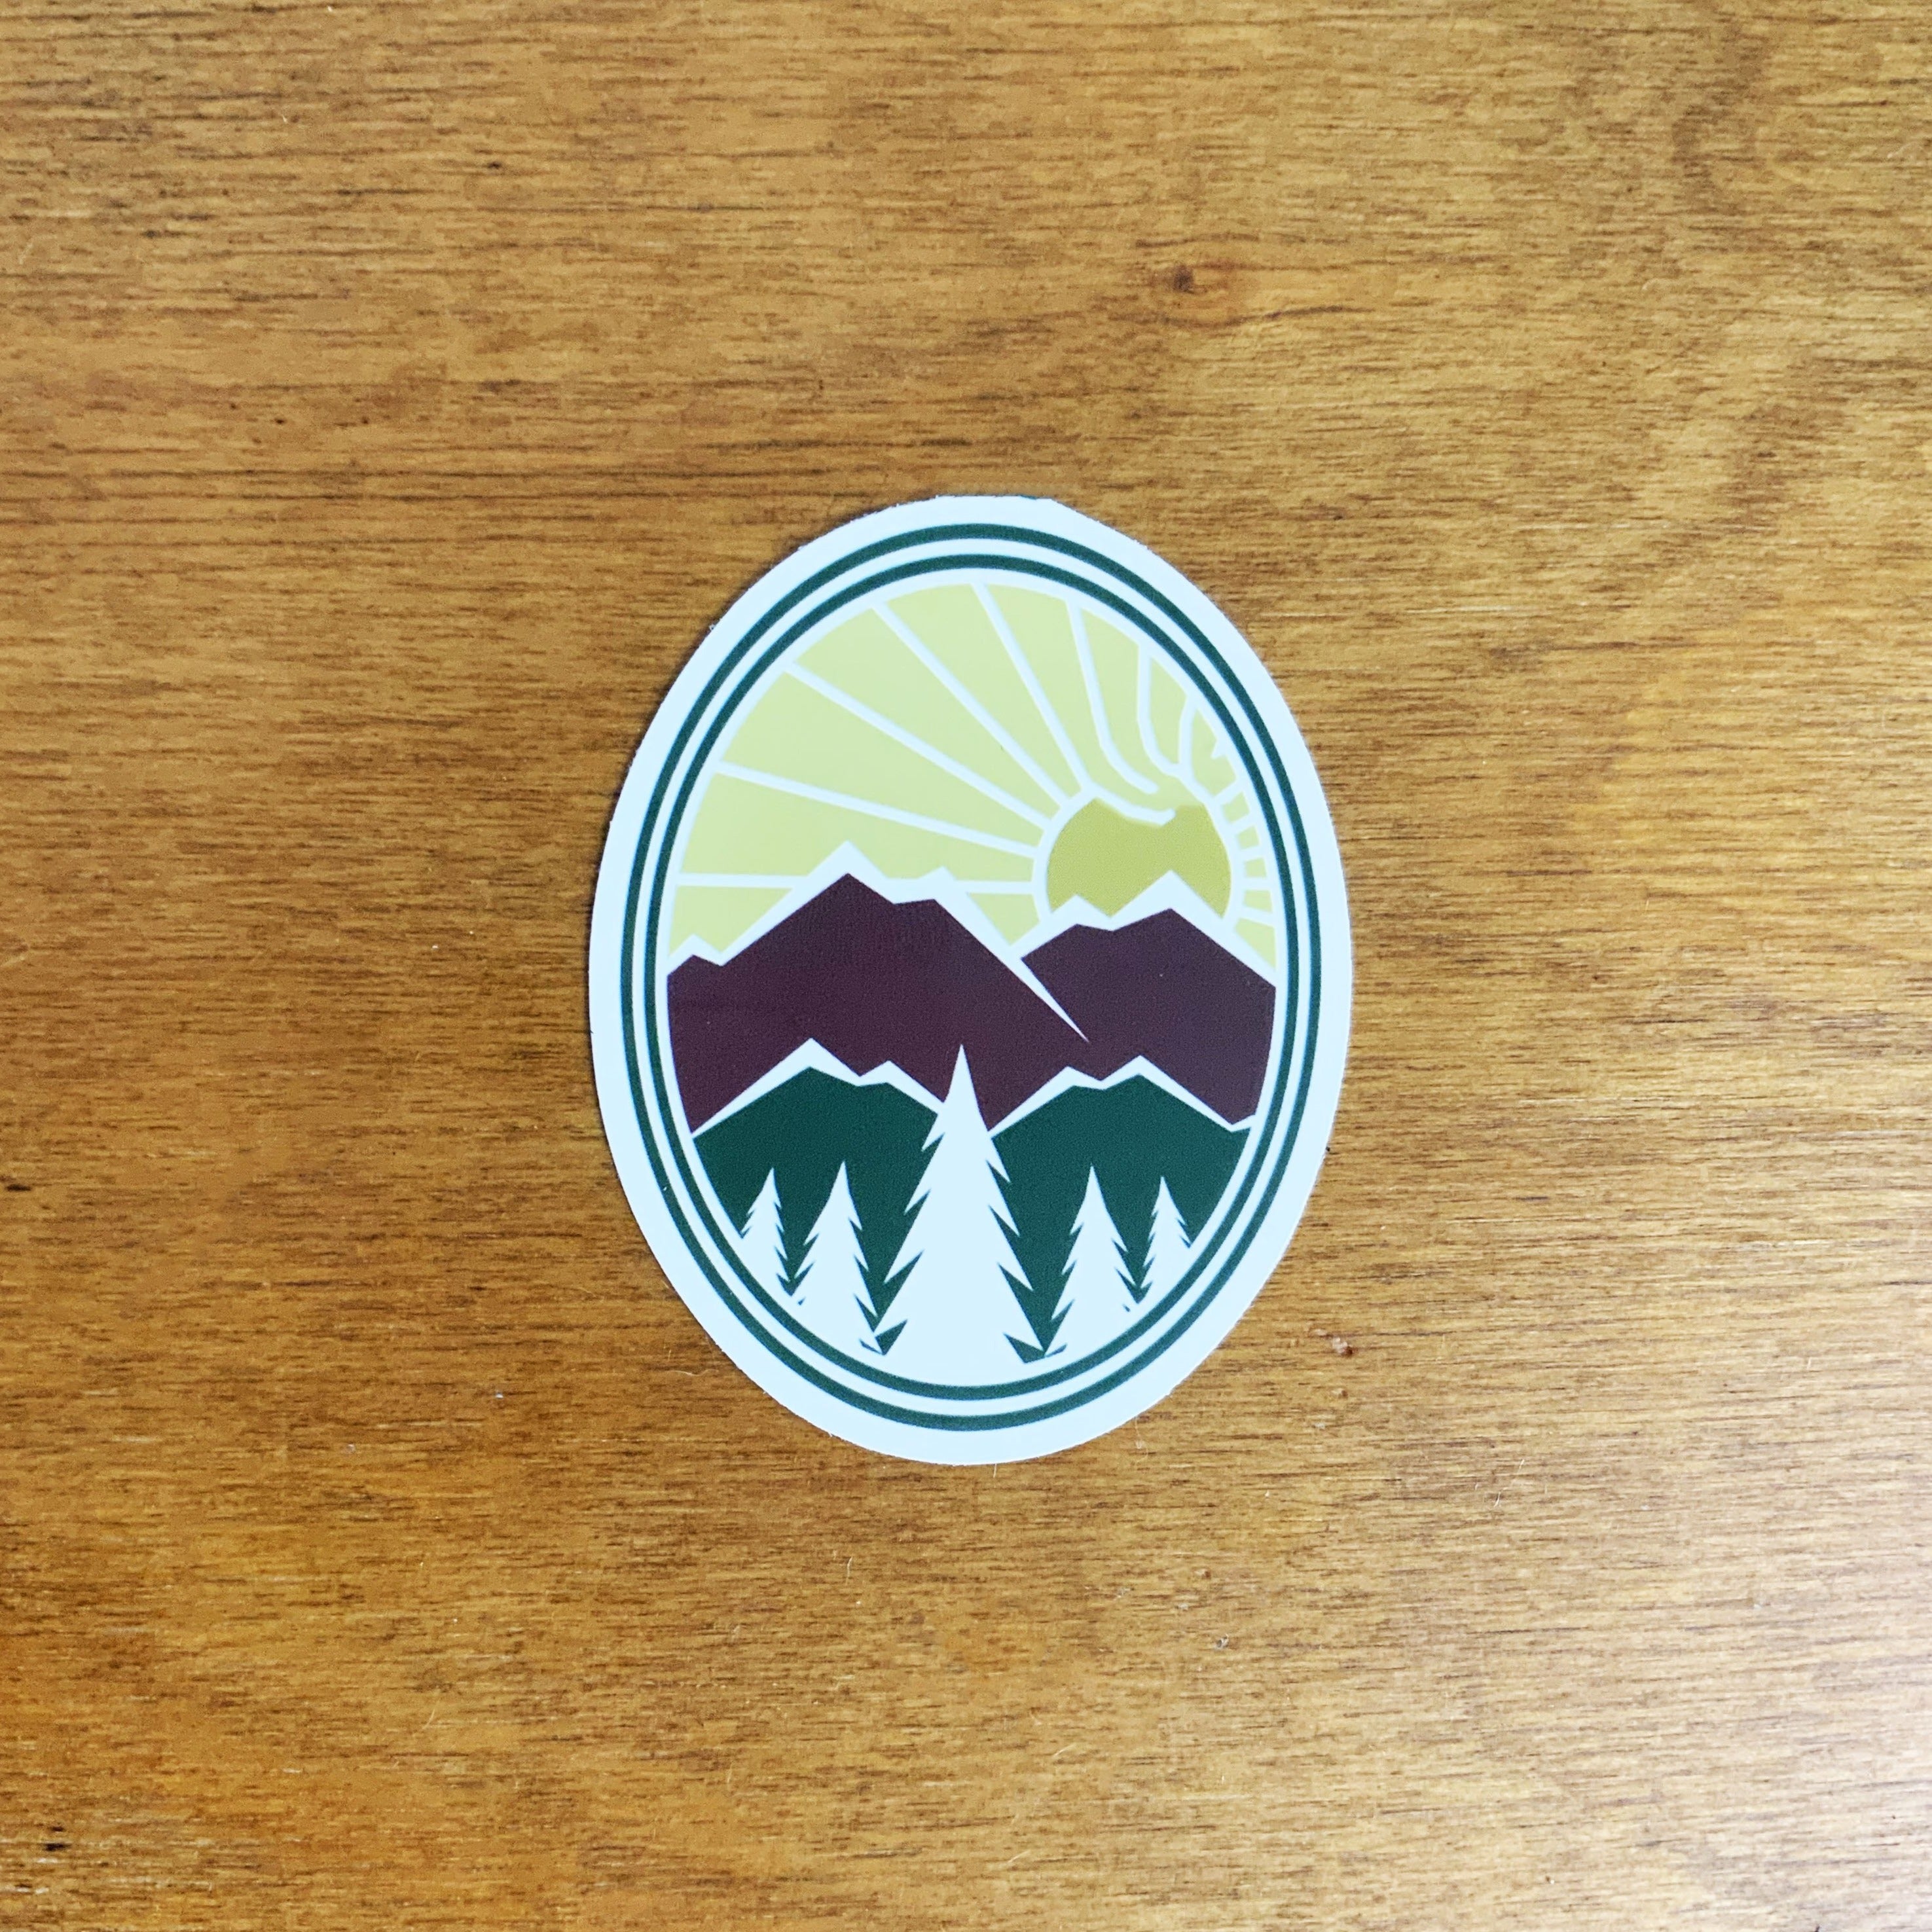 Evergreen Peak Sticker, sticker, Pacific Rayne, Defiance Outdoor Gear Co.